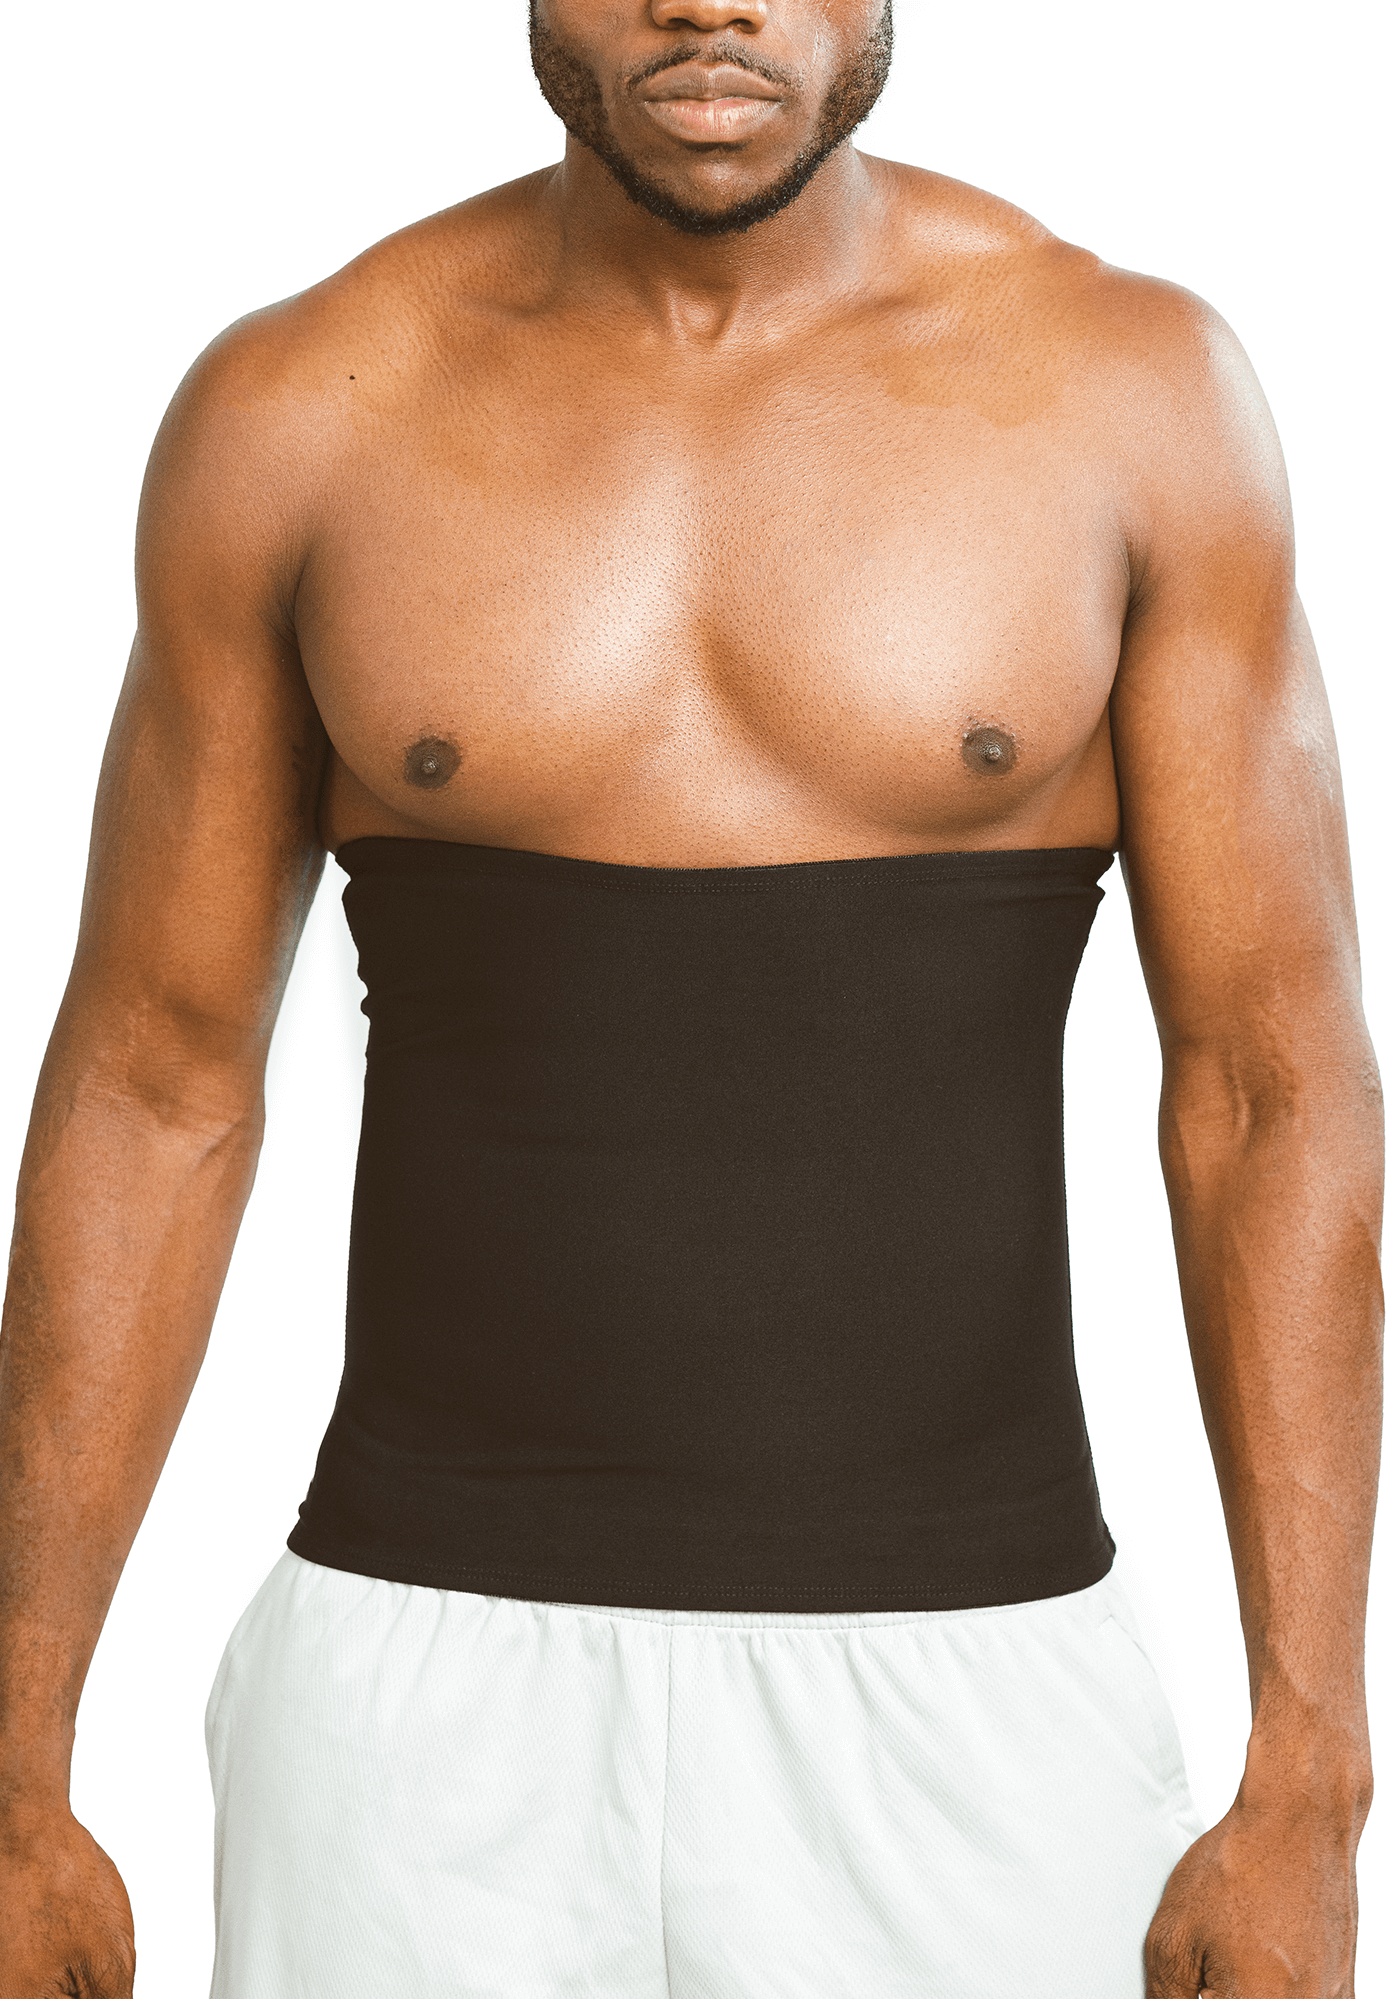 Filfeel Waist Trimmer Weight Loss Men Body Shaper Trainer Sweat Band  Stomach Sauna Sweat Slim Slimming Belt, Neoprene Black